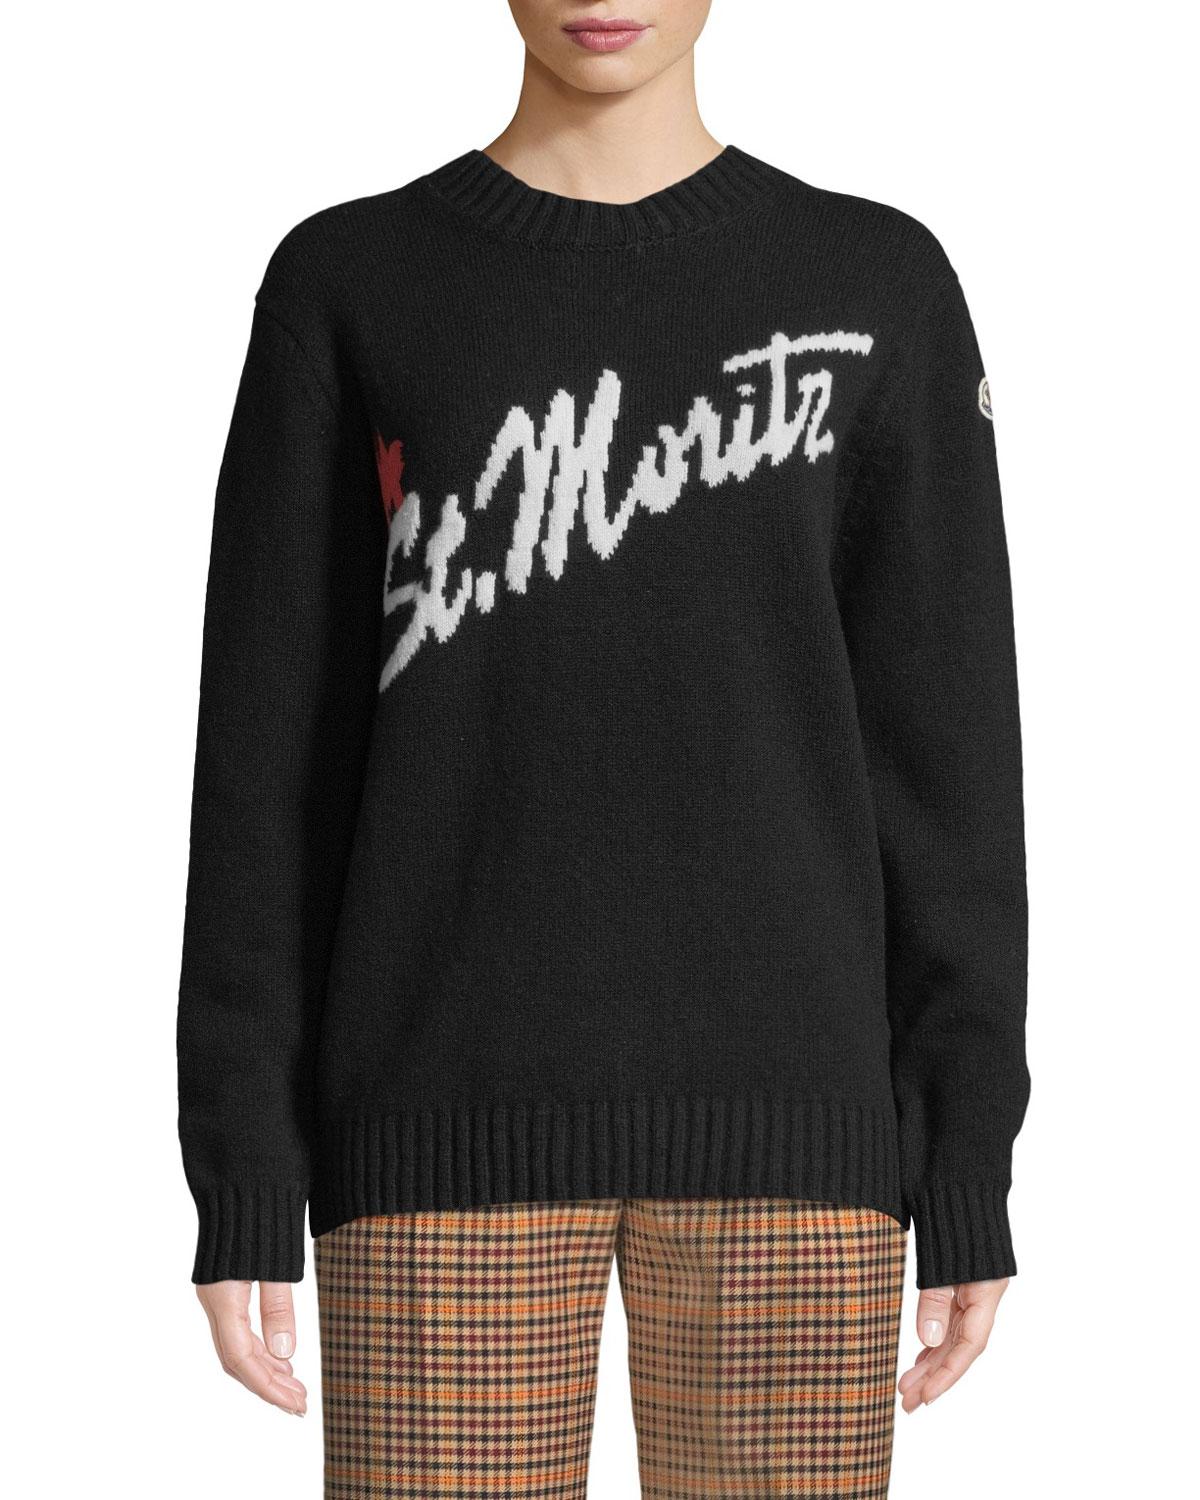 Moncler St Moritz Sweater Discount - www.bridgepartnersllc.com 1693376336